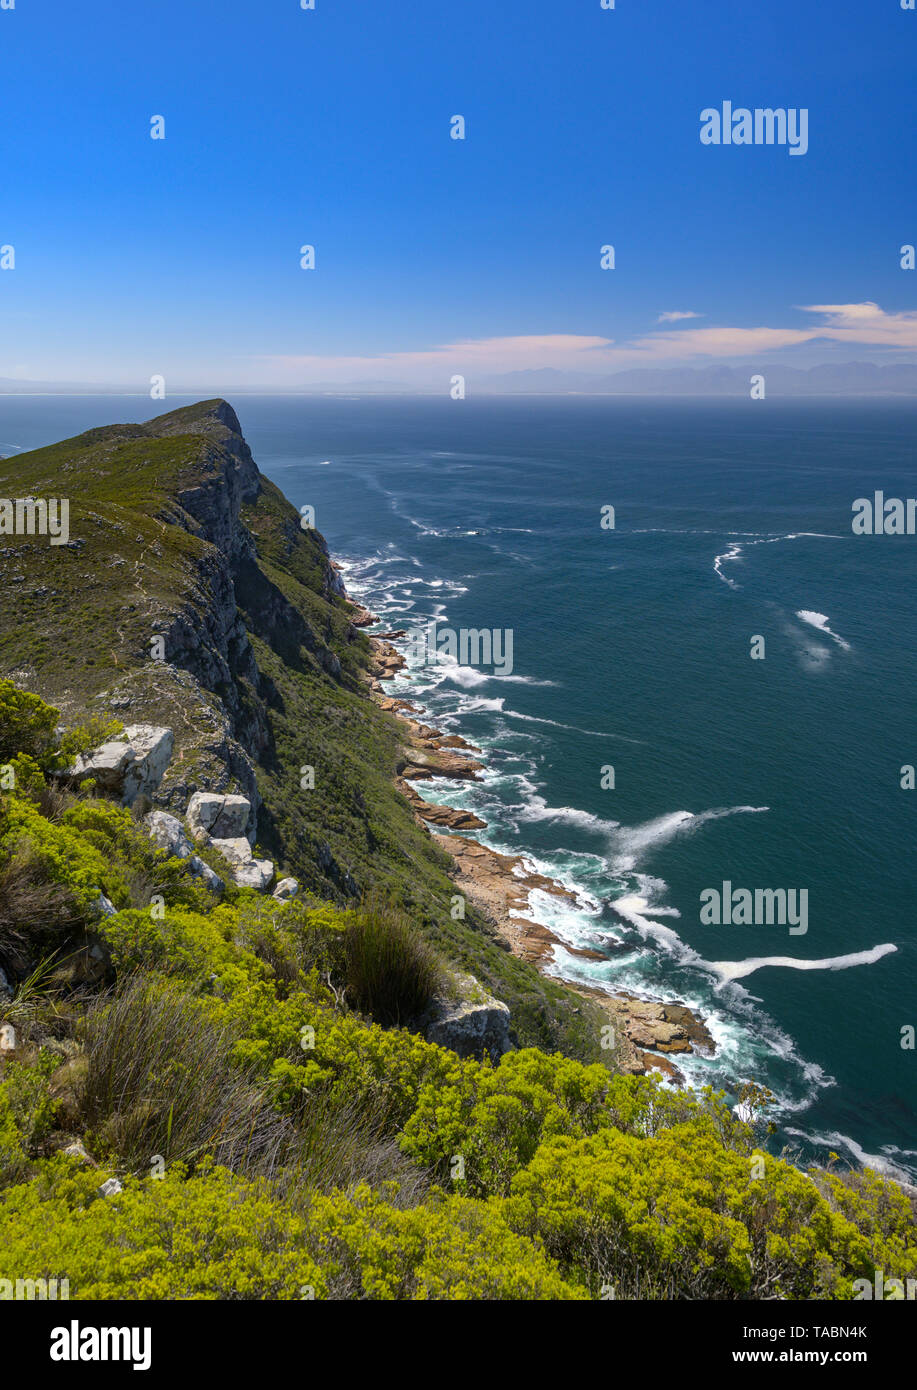 Blick vom Gipfel des Paulsberg Höhepunkt in den Cape Point Abschnitt des Table Mountain National Park in Kapstadt, Südafrika. Stockfoto